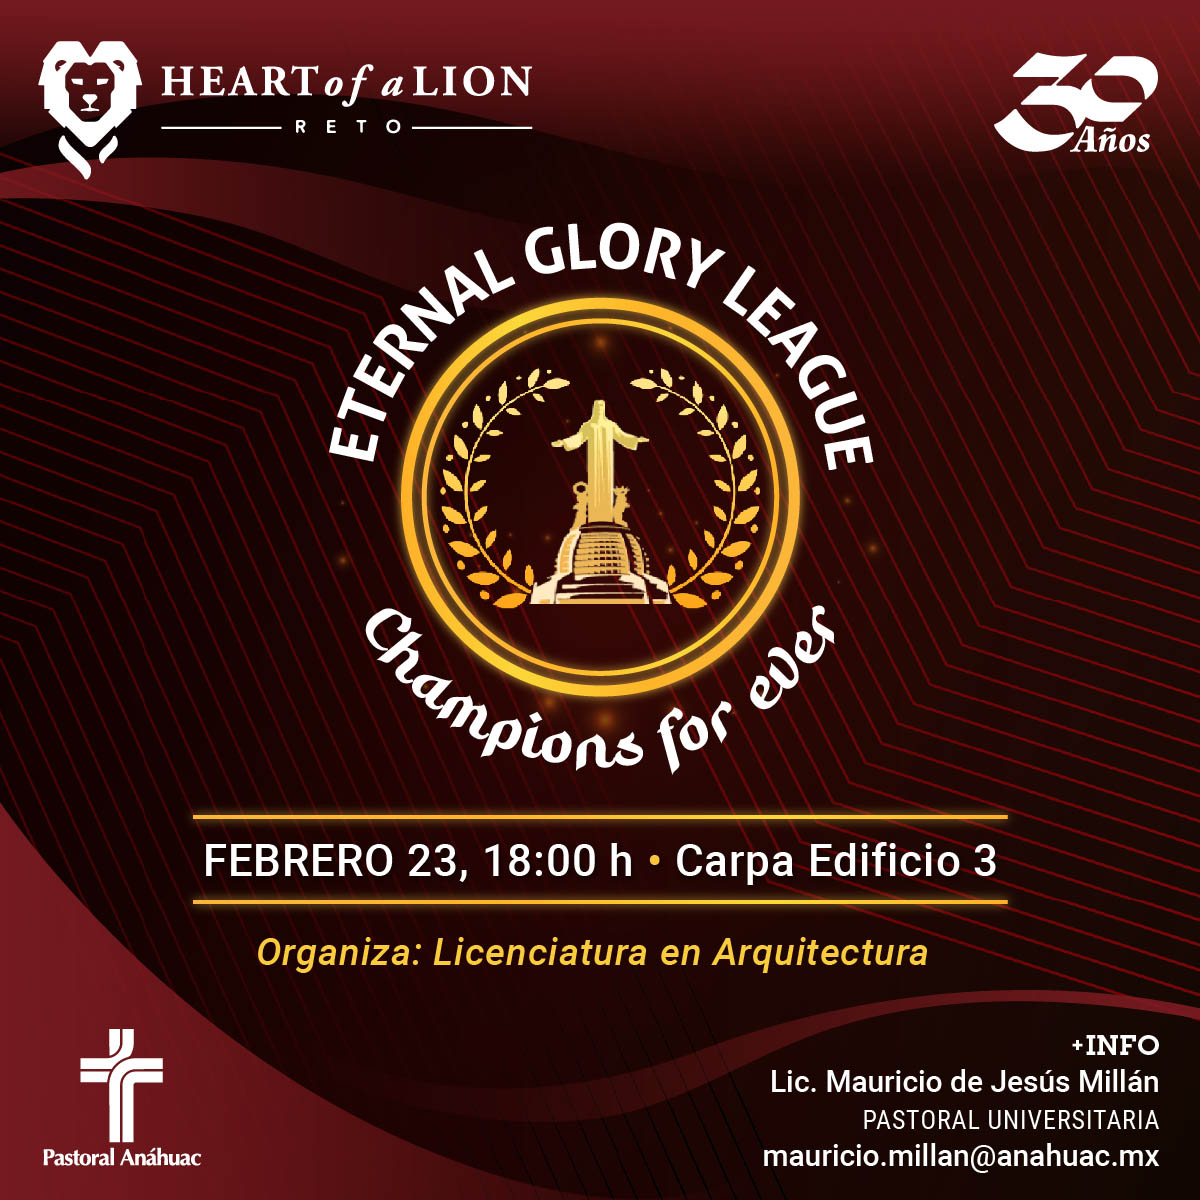 Reto Heart of a Lion: Eternal Glory League